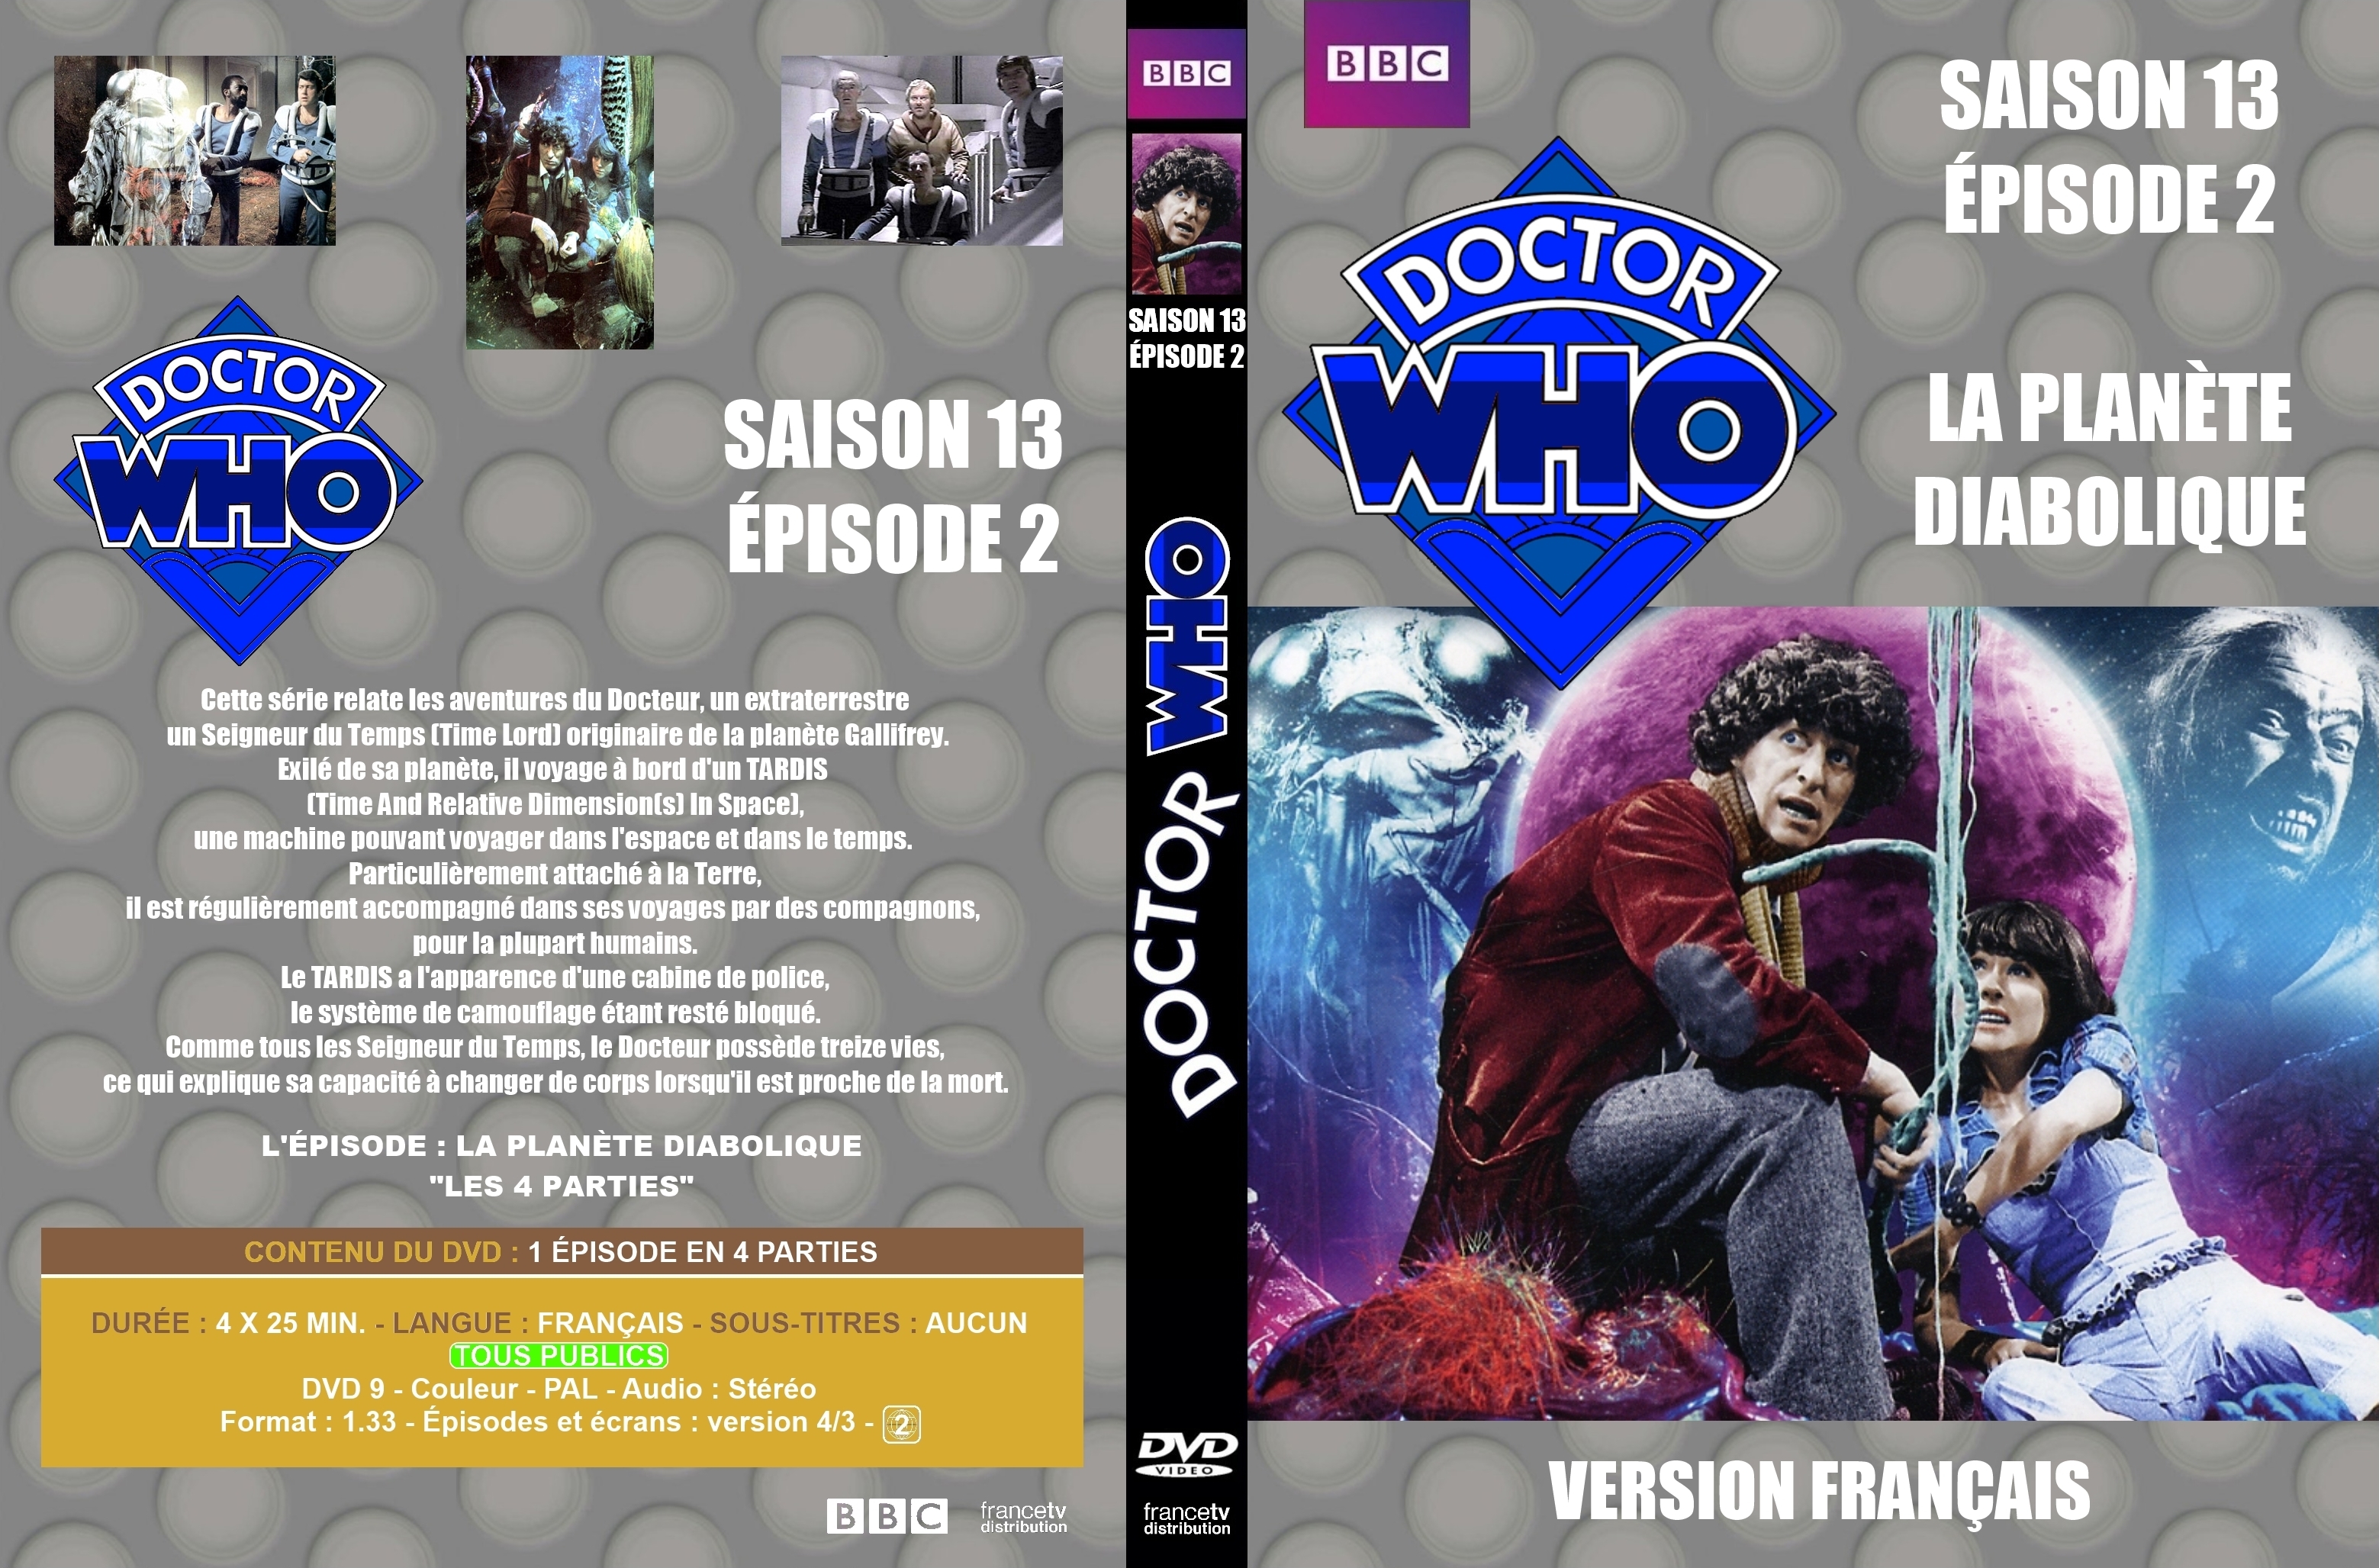 Jaquette DVD Doctor Who Classic Saison 13 pisode 2 custom 